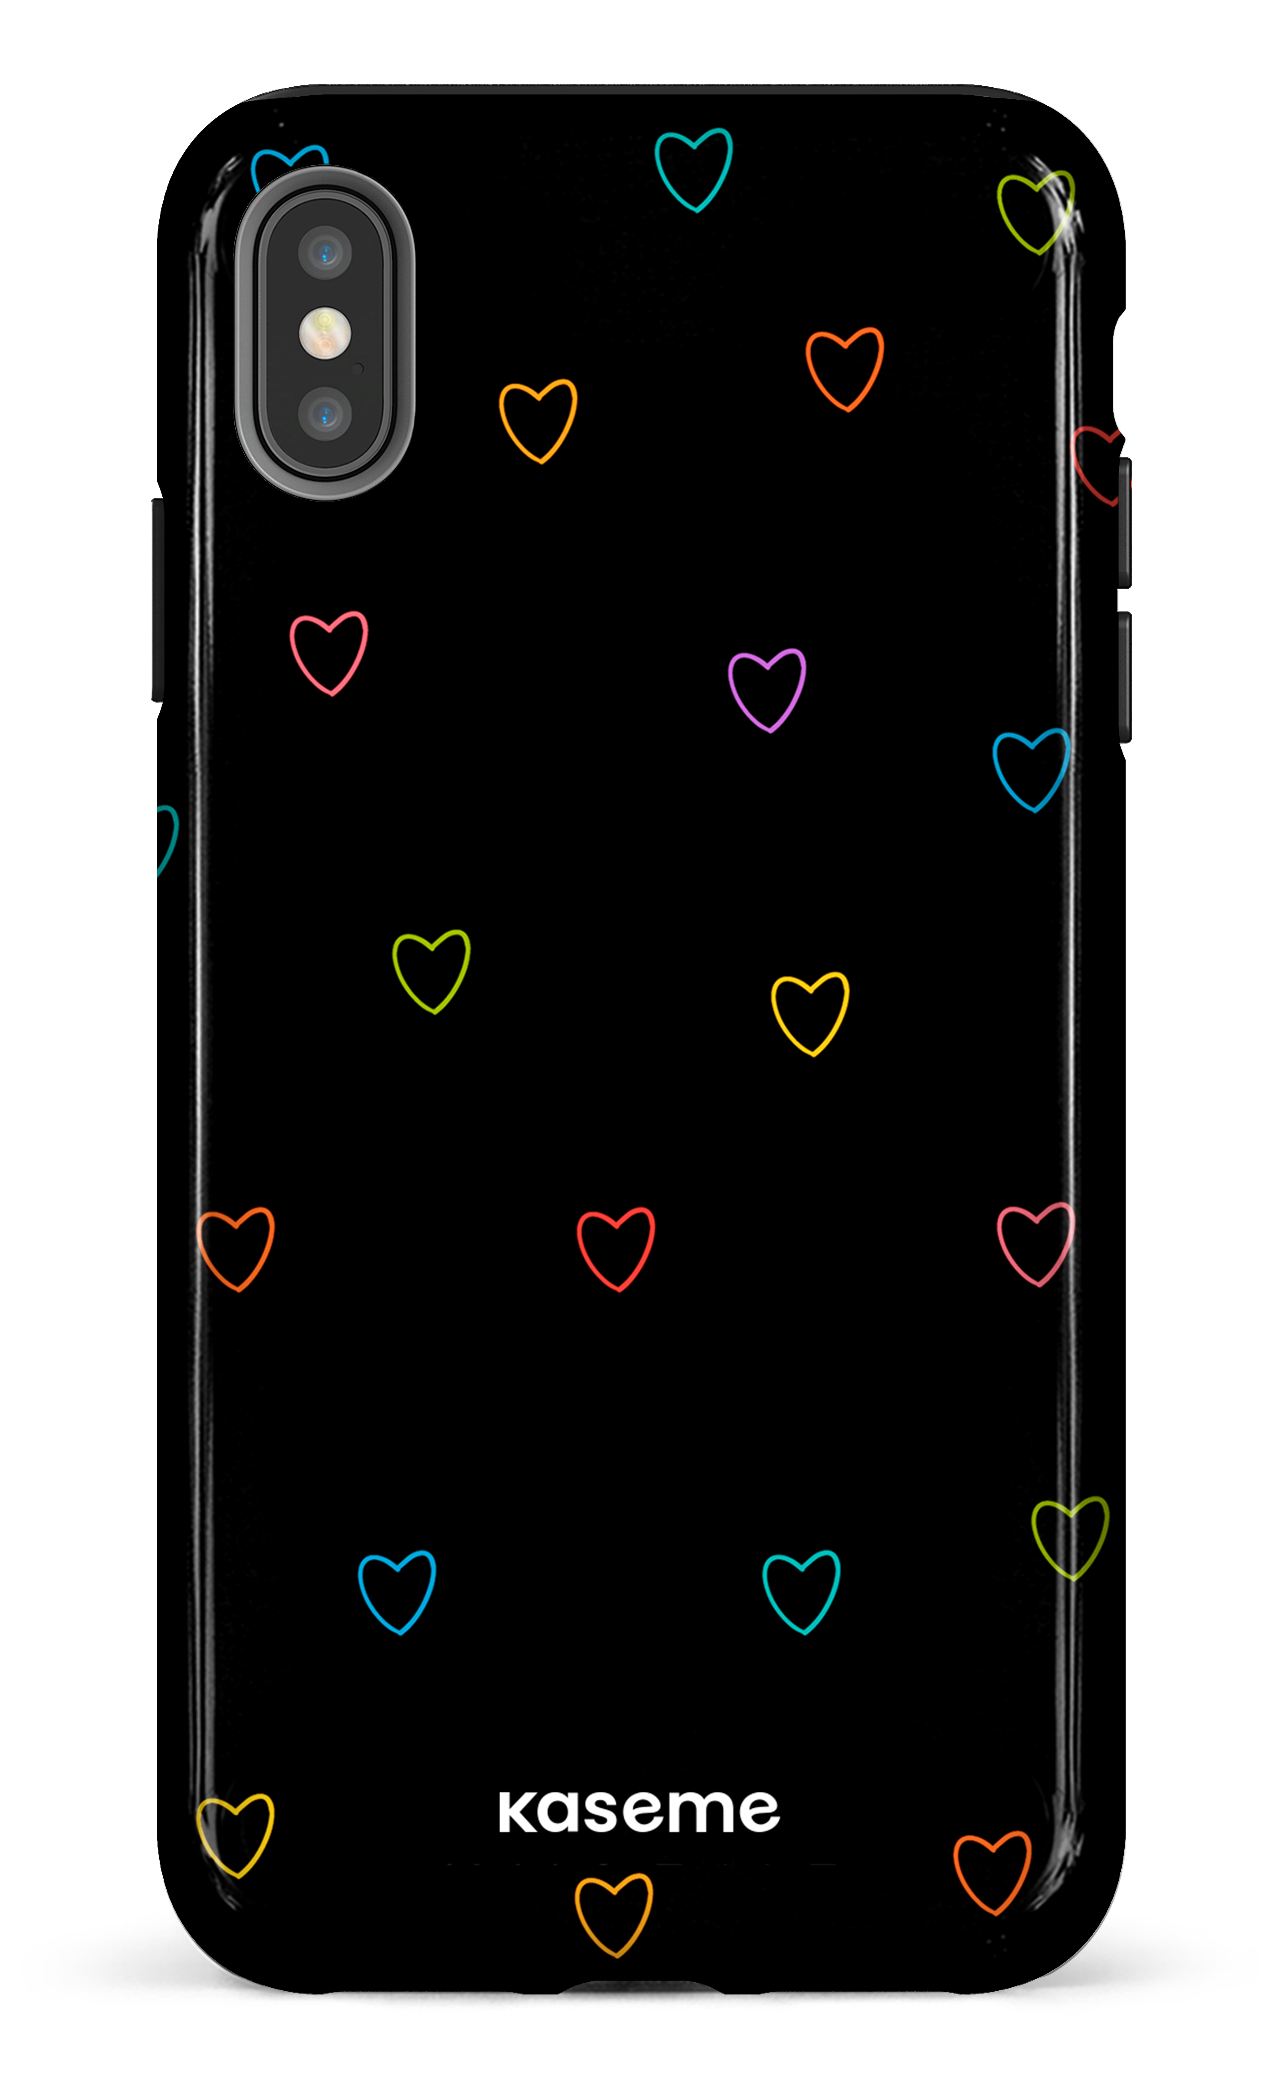 Love Wins - iPhone XS Max